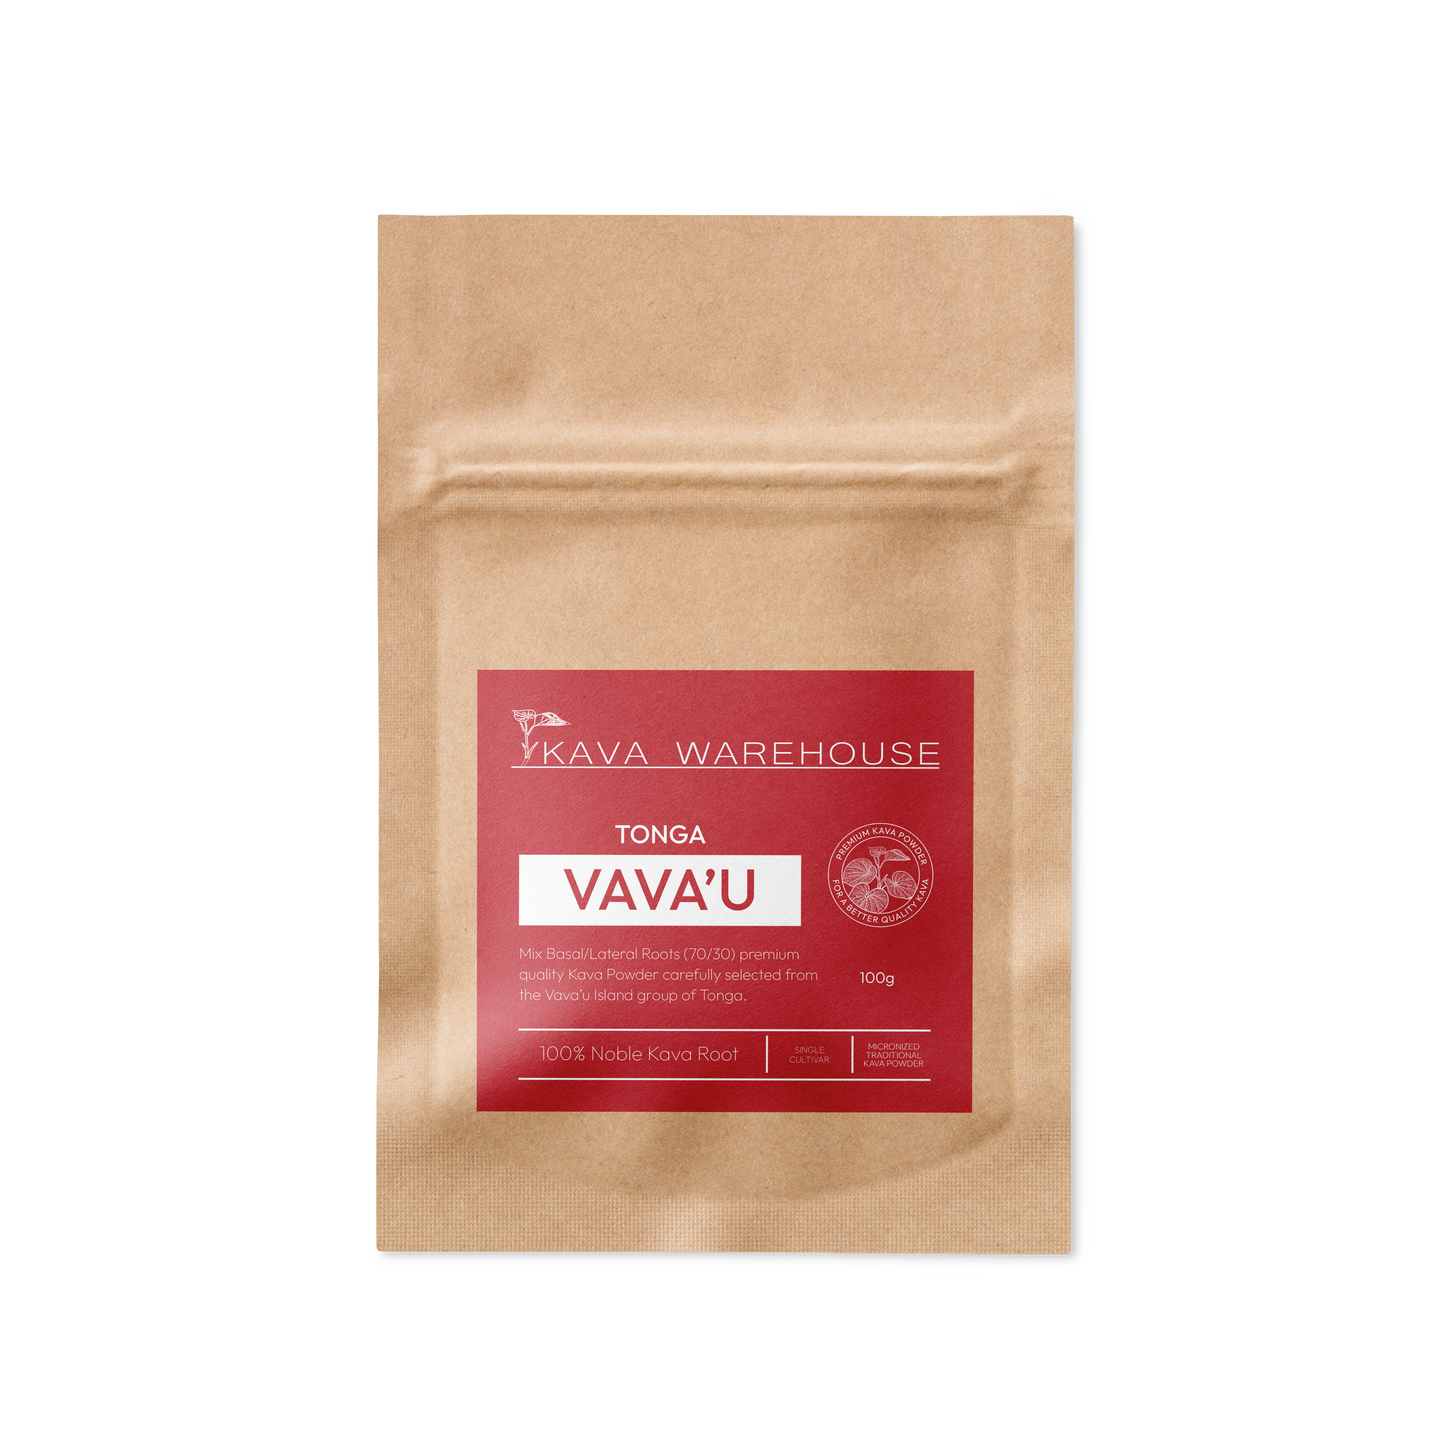 Vava'u -Tonga -Micronized Traditional Powder